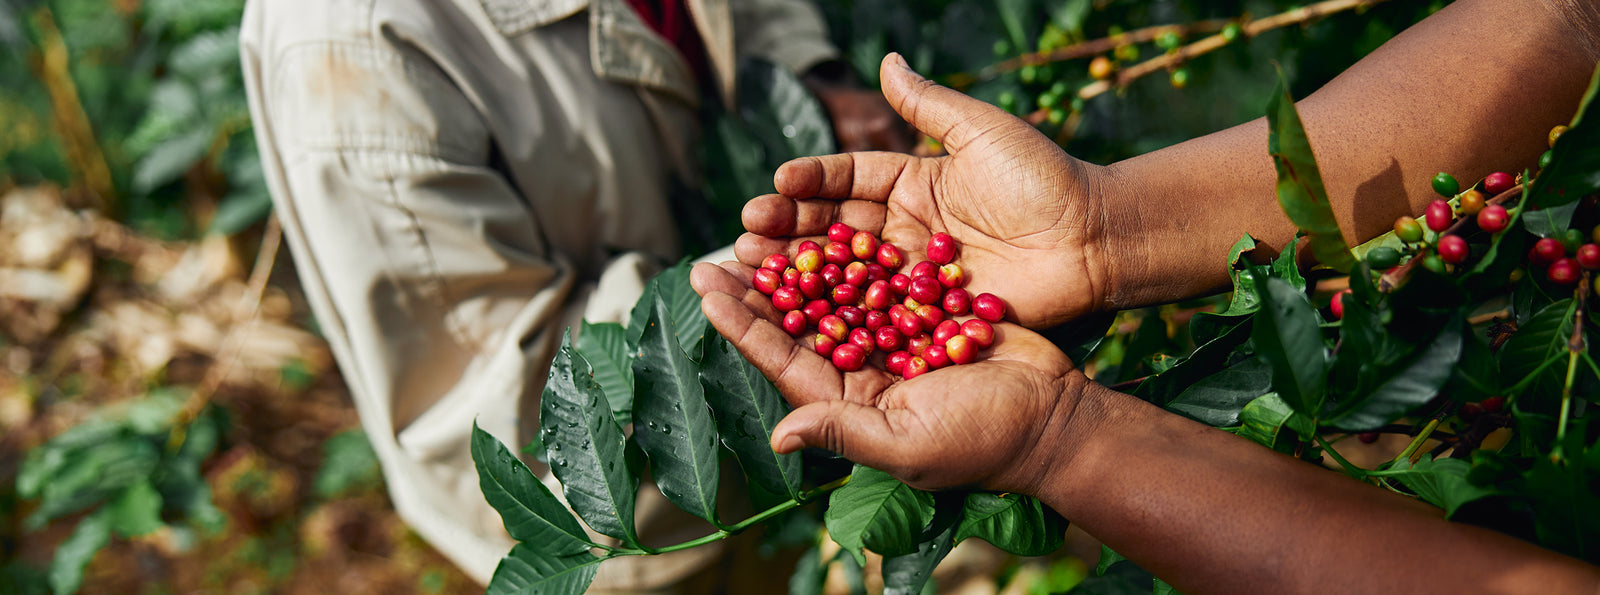 Ground Coffee Society coffee farmer holding coffee beans